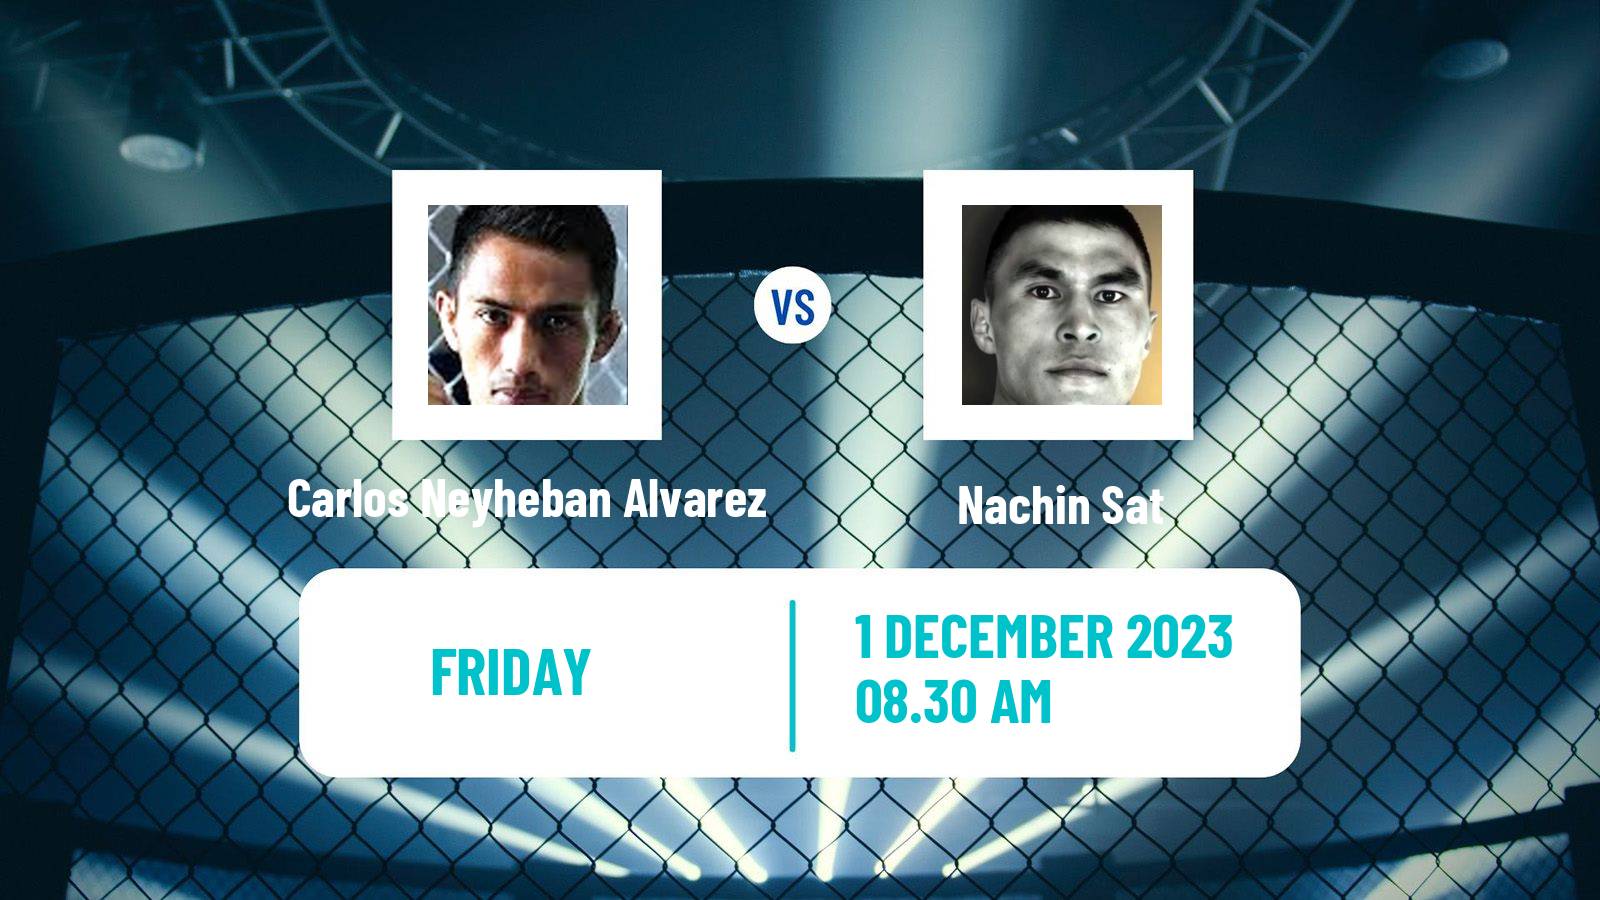 MMA Featherweight One Championship Men Carlos Neyheban Alvarez - Nachin Sat